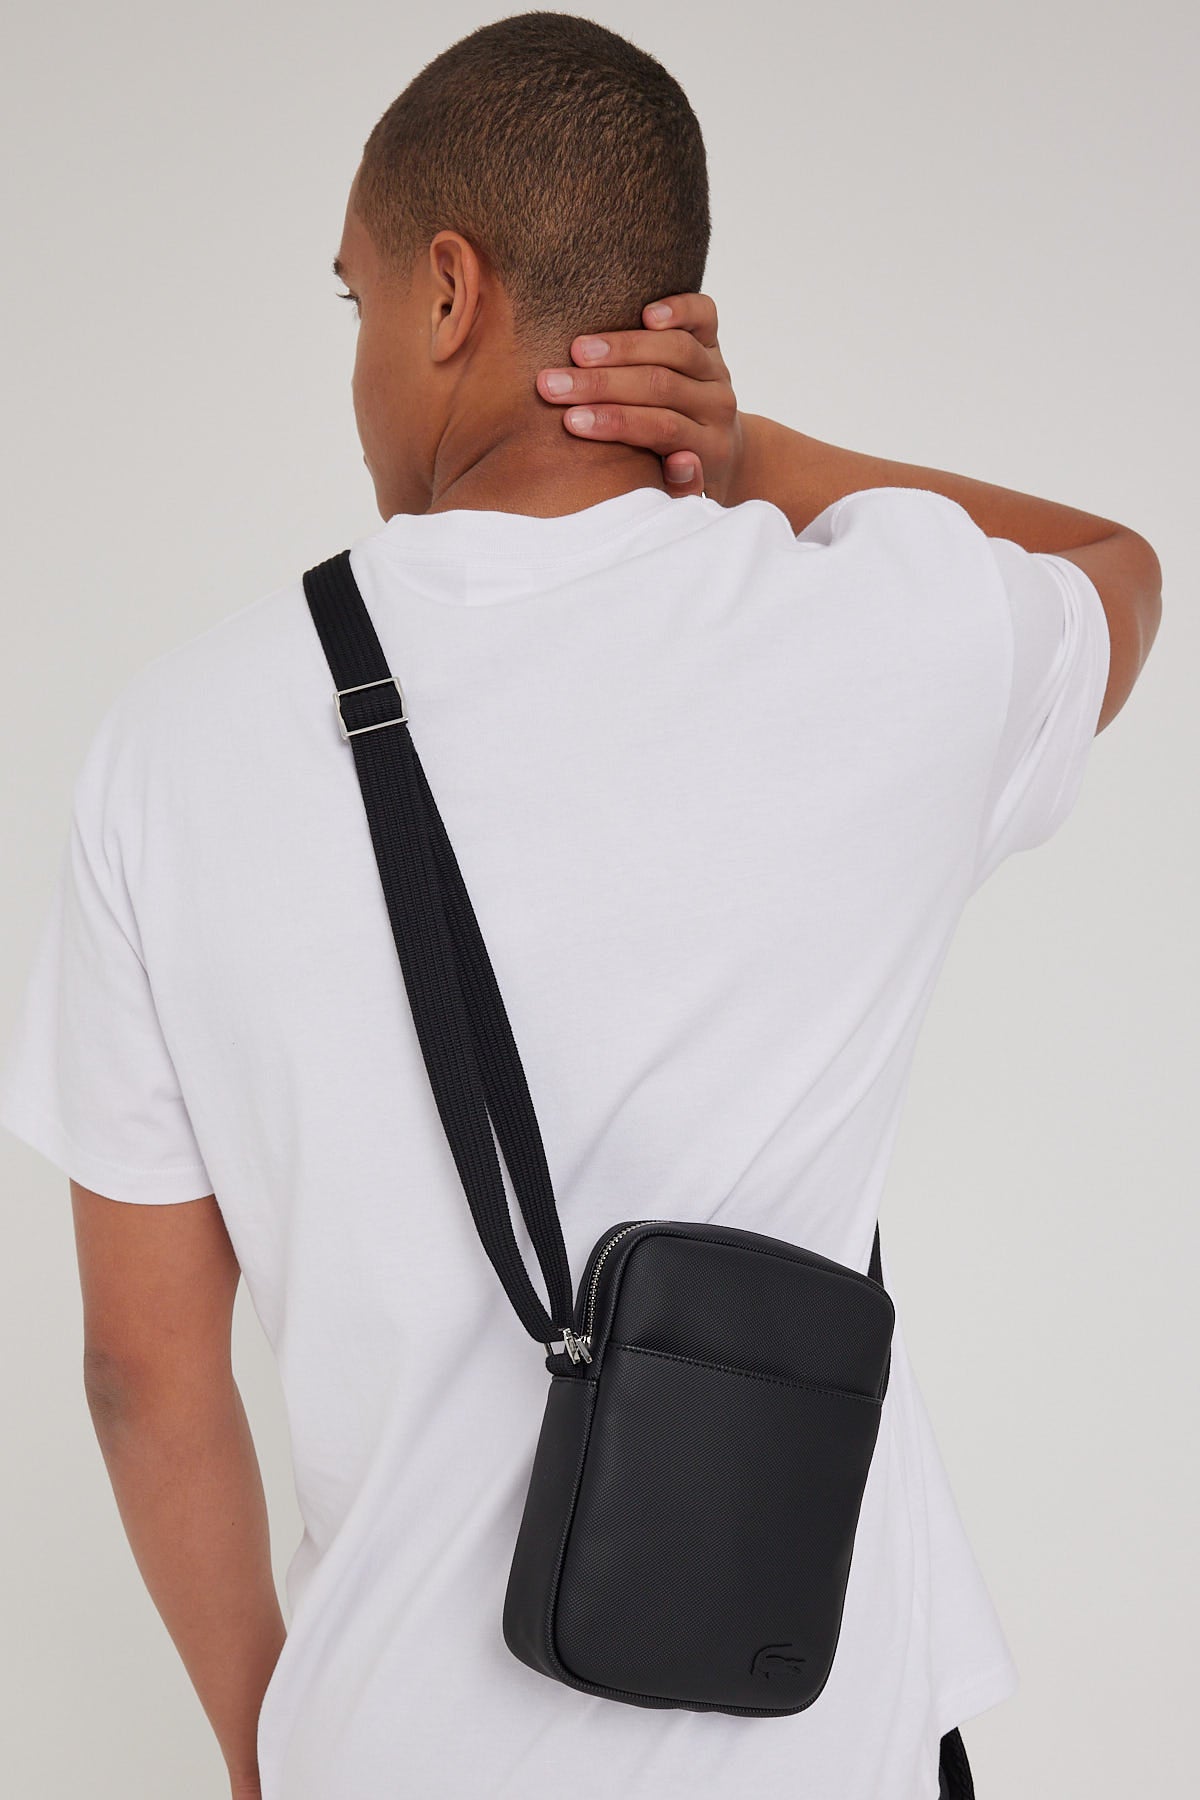 Lacoste Men's Classic Crossover Bag Black – Universal Store